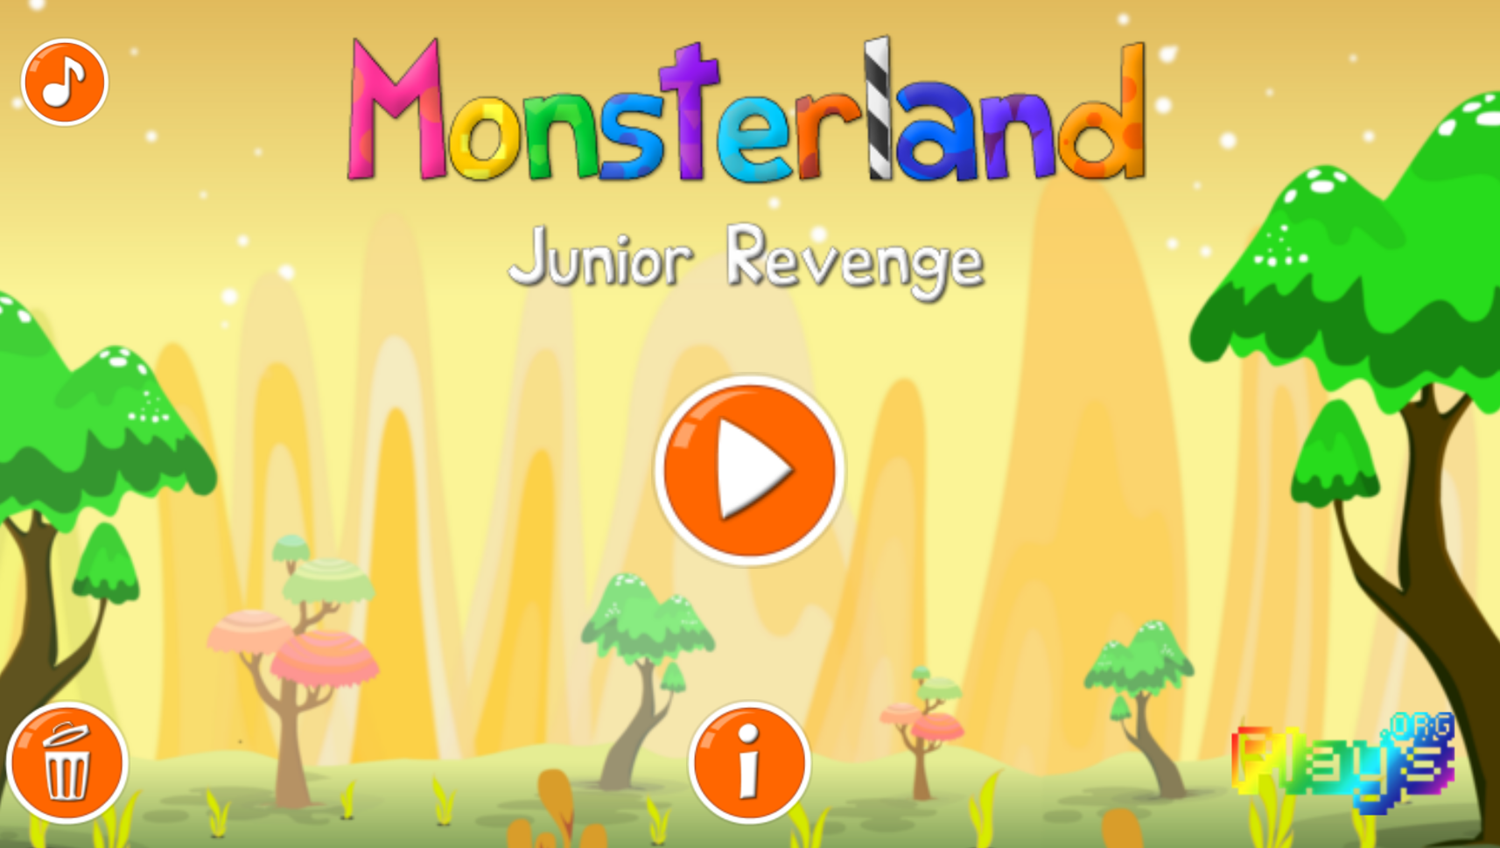 Monsterland 2 Junior Revenge Welcome Screen Screenshot.